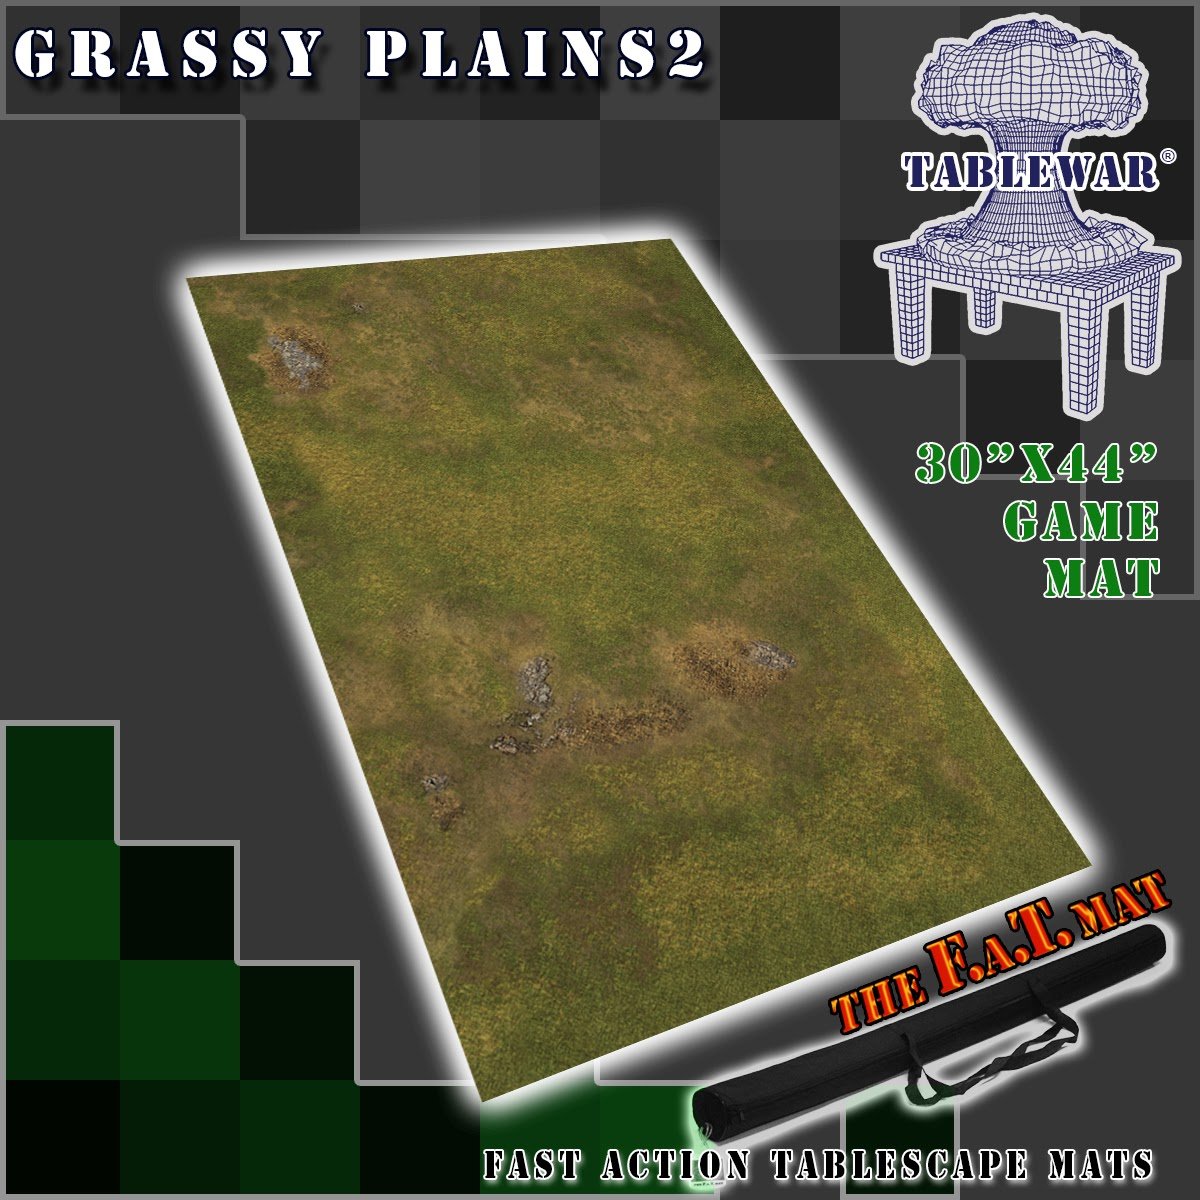 F.A.T. Mats: Grassy Plains 2 30"X44" 